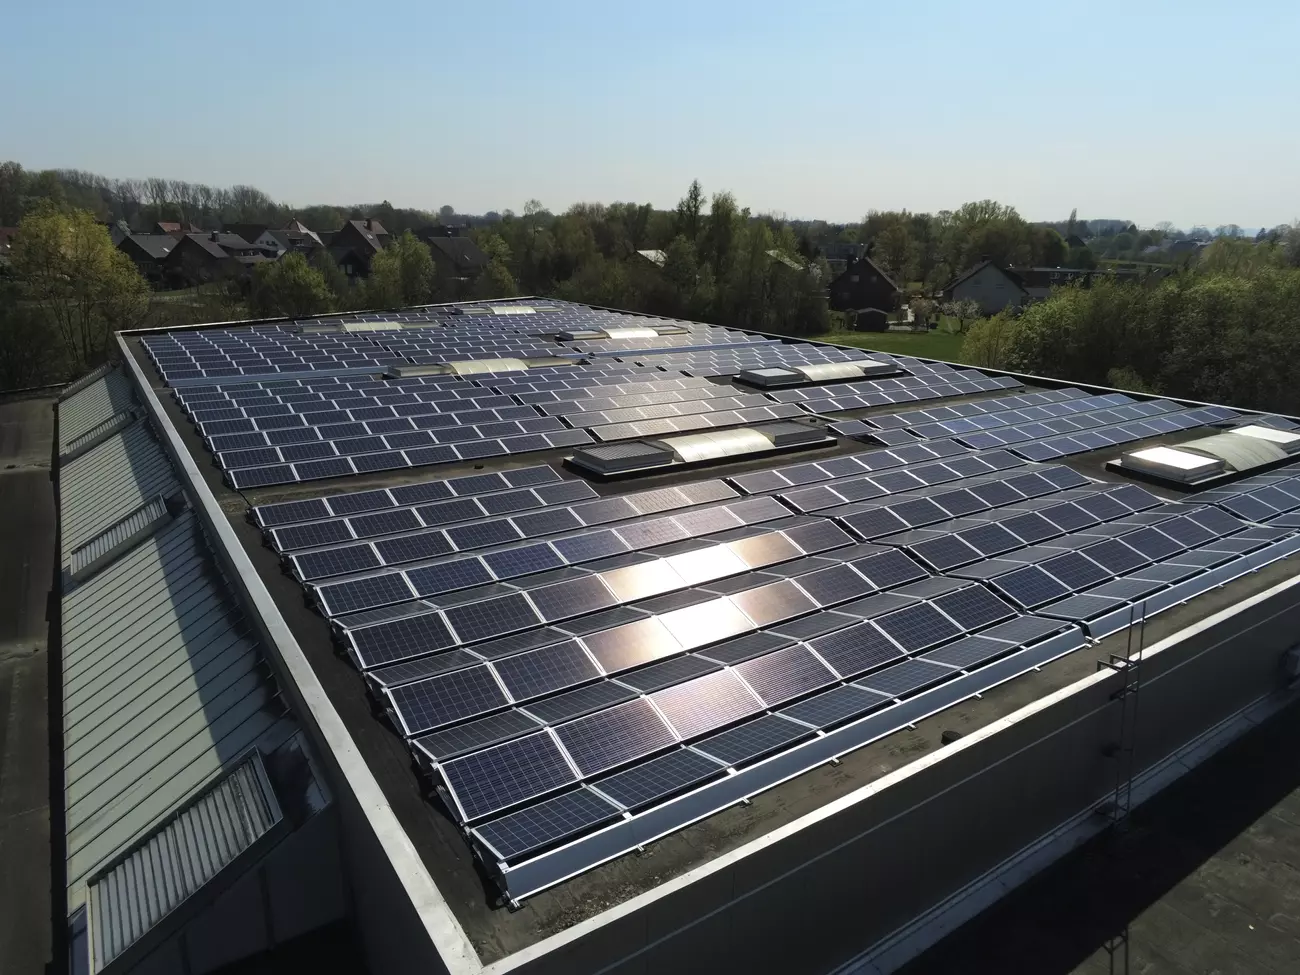 Solar modules from Solarwatt